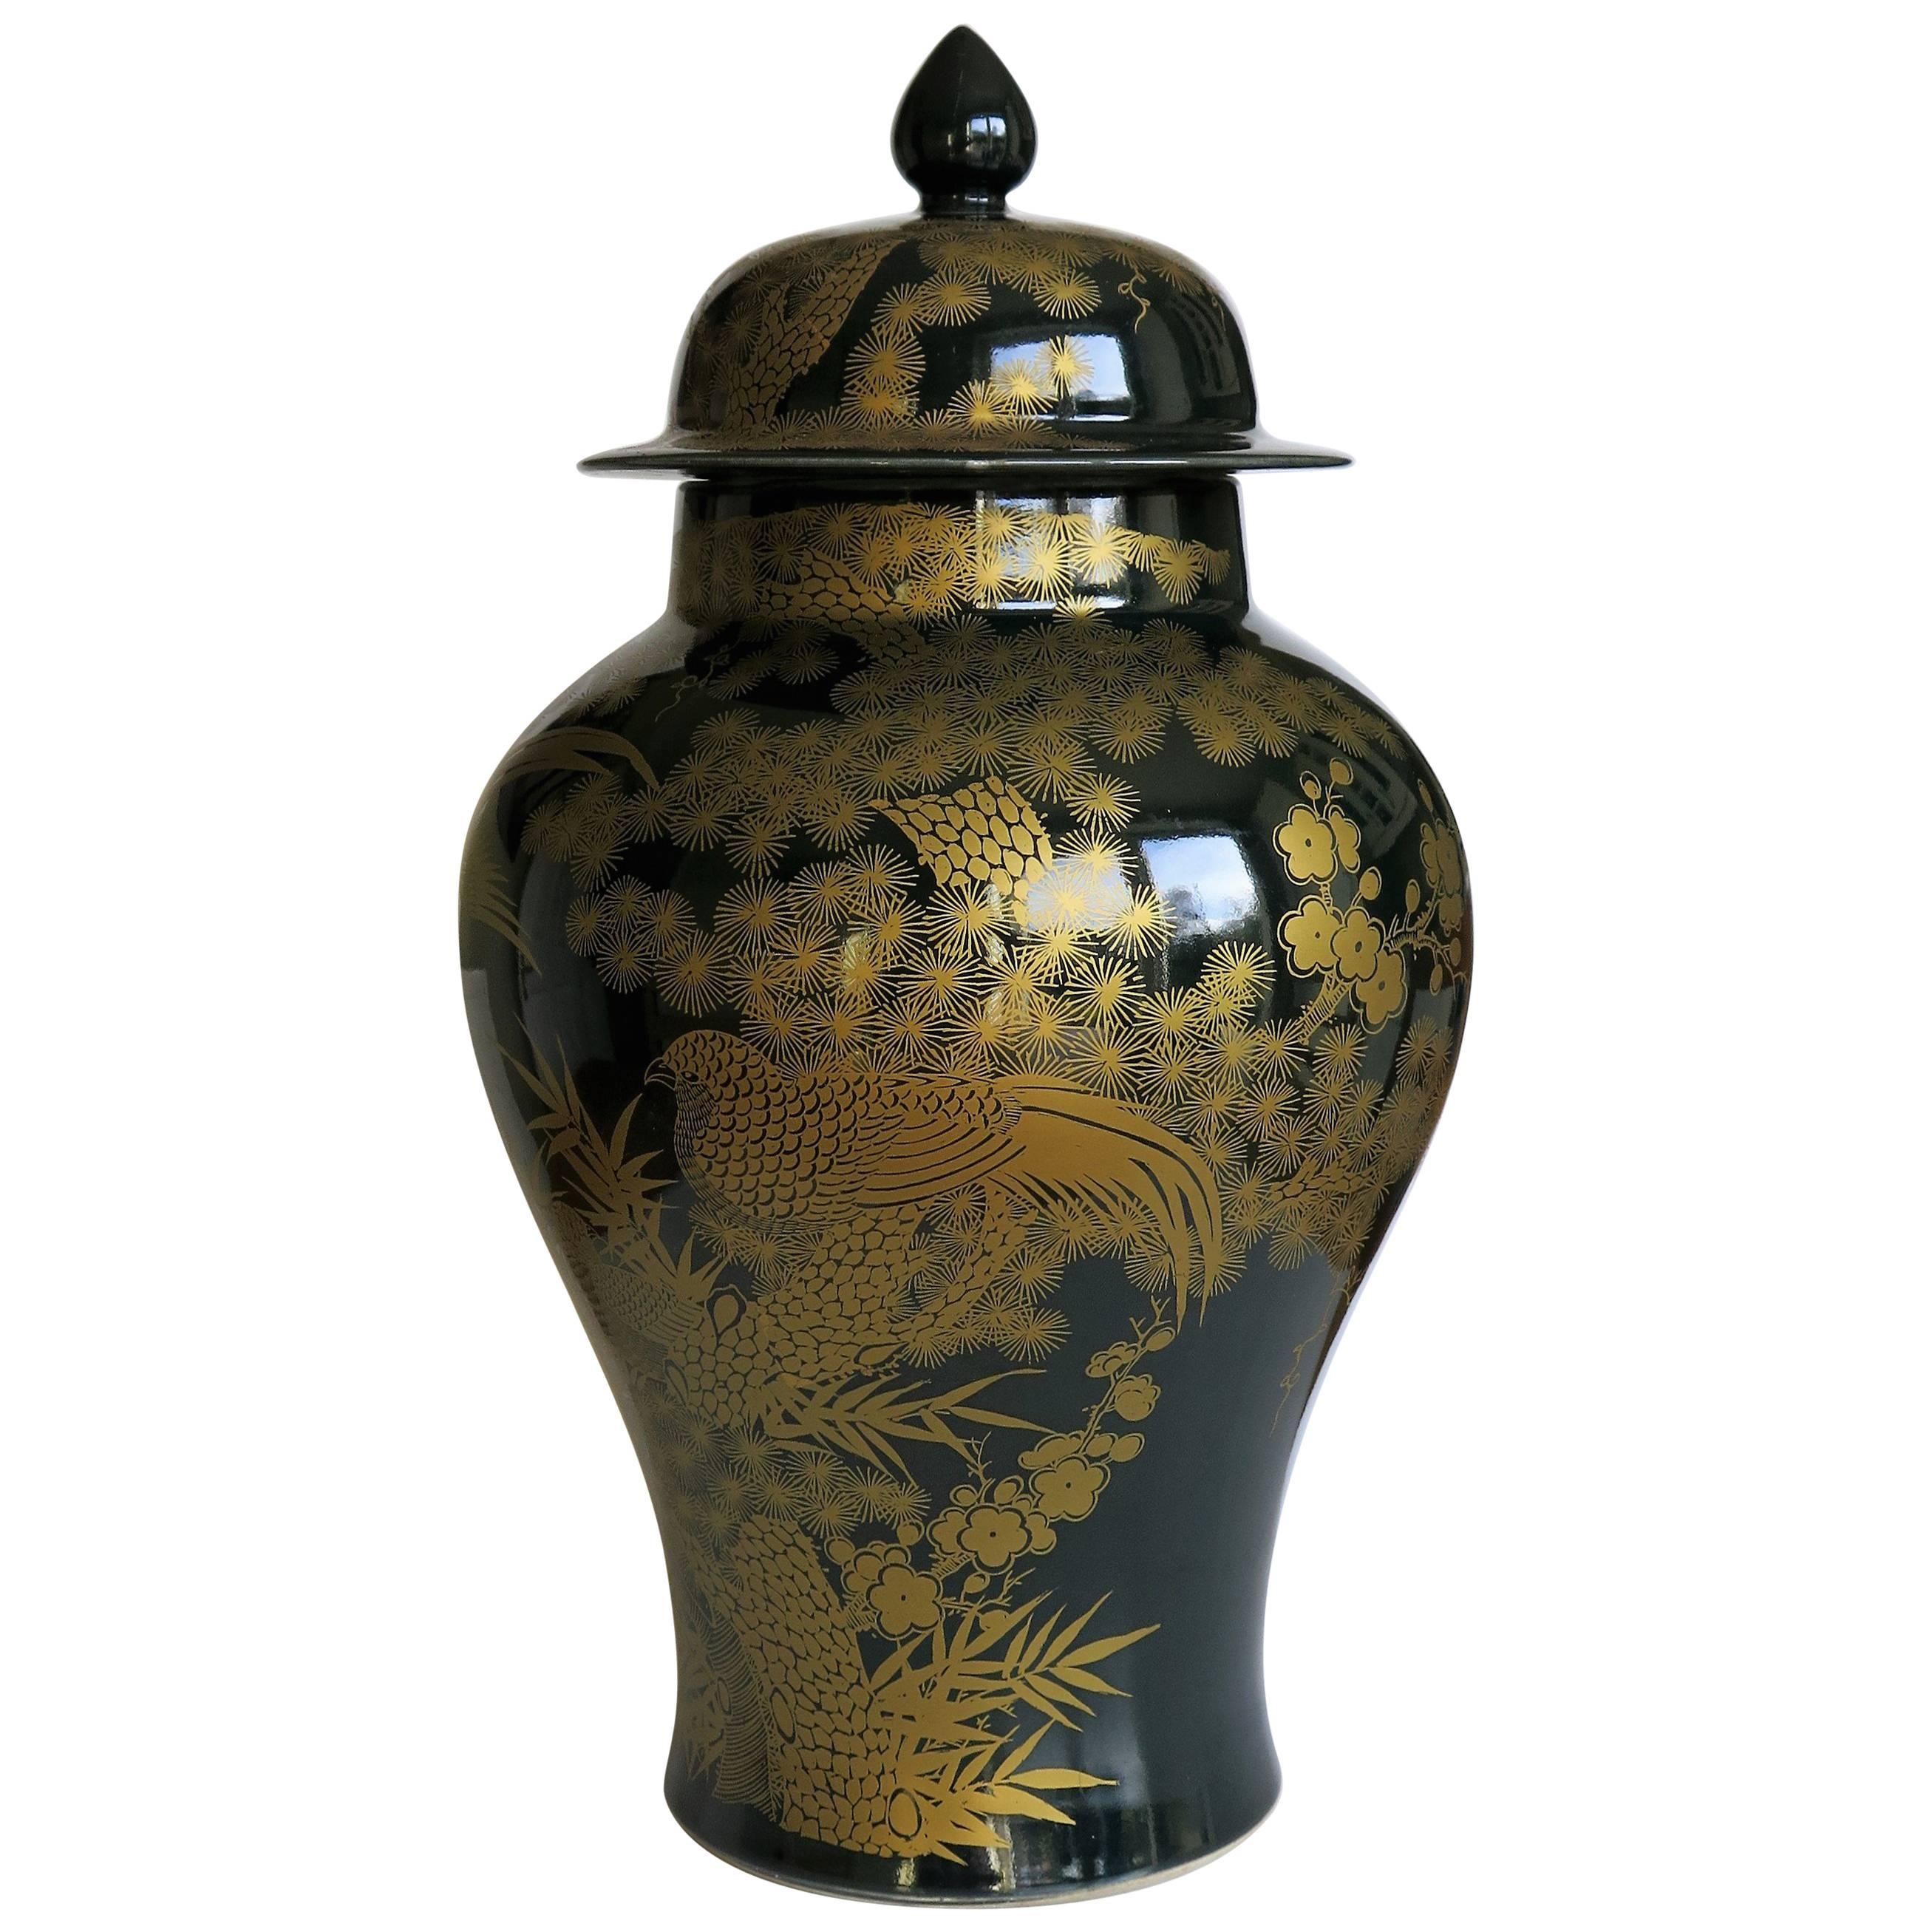 Large Chinese Porcelain Lidded Vase or Jar Gilded Decoration, 19th Century Qing